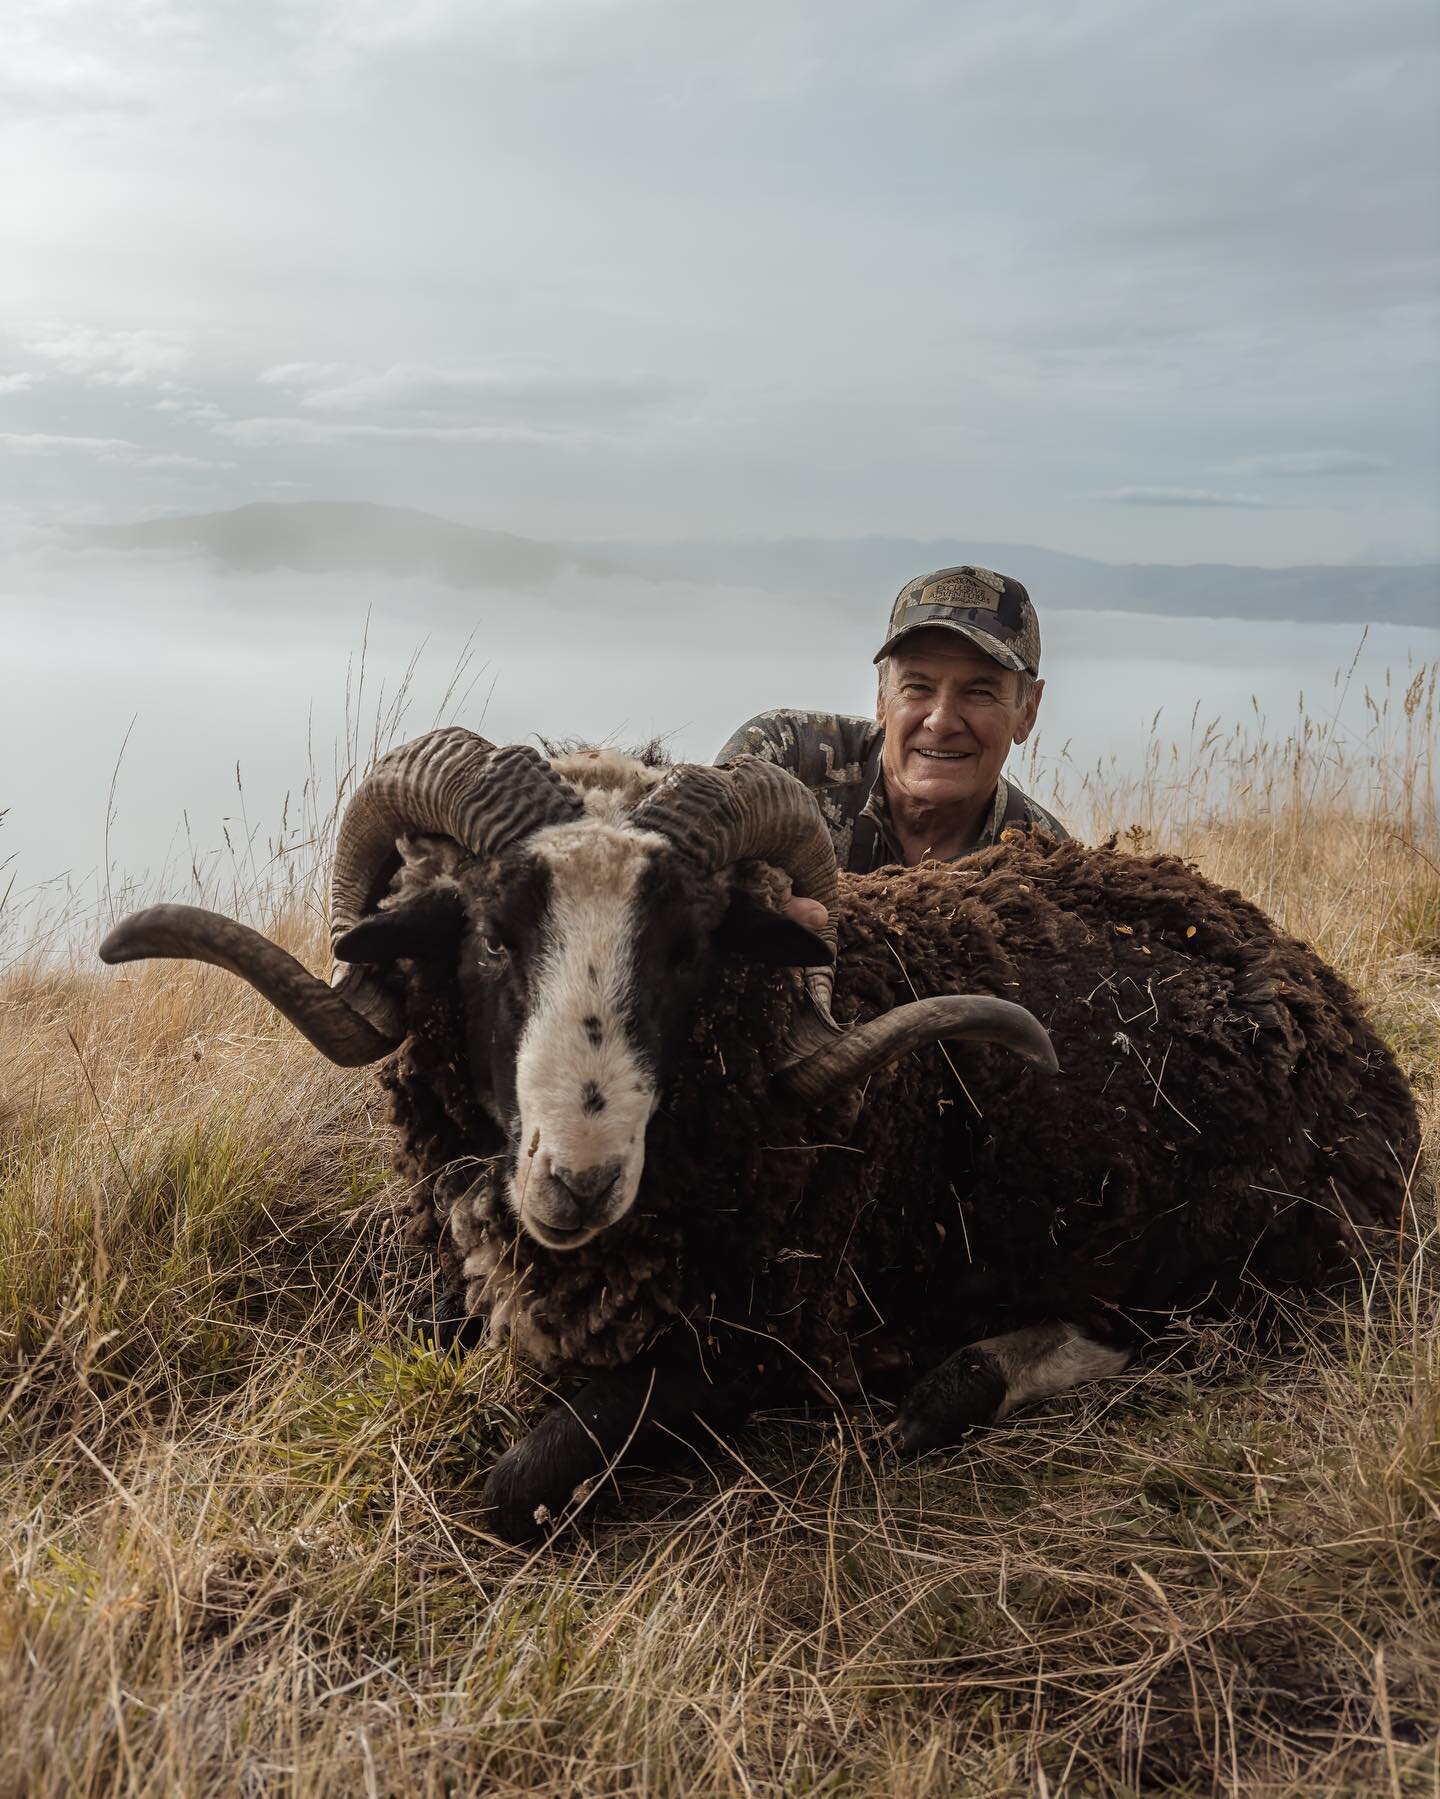 Misty morning ram hunt 

Photo by guide @joe.fluerty 

#exclusiveadventuresnz #newzealand #newzealandhunting #arapawasheep #arapawaram #ramhunting #kuiunation #kuiu #whatgetsyououtdoors #mountainhunting #travelhunting